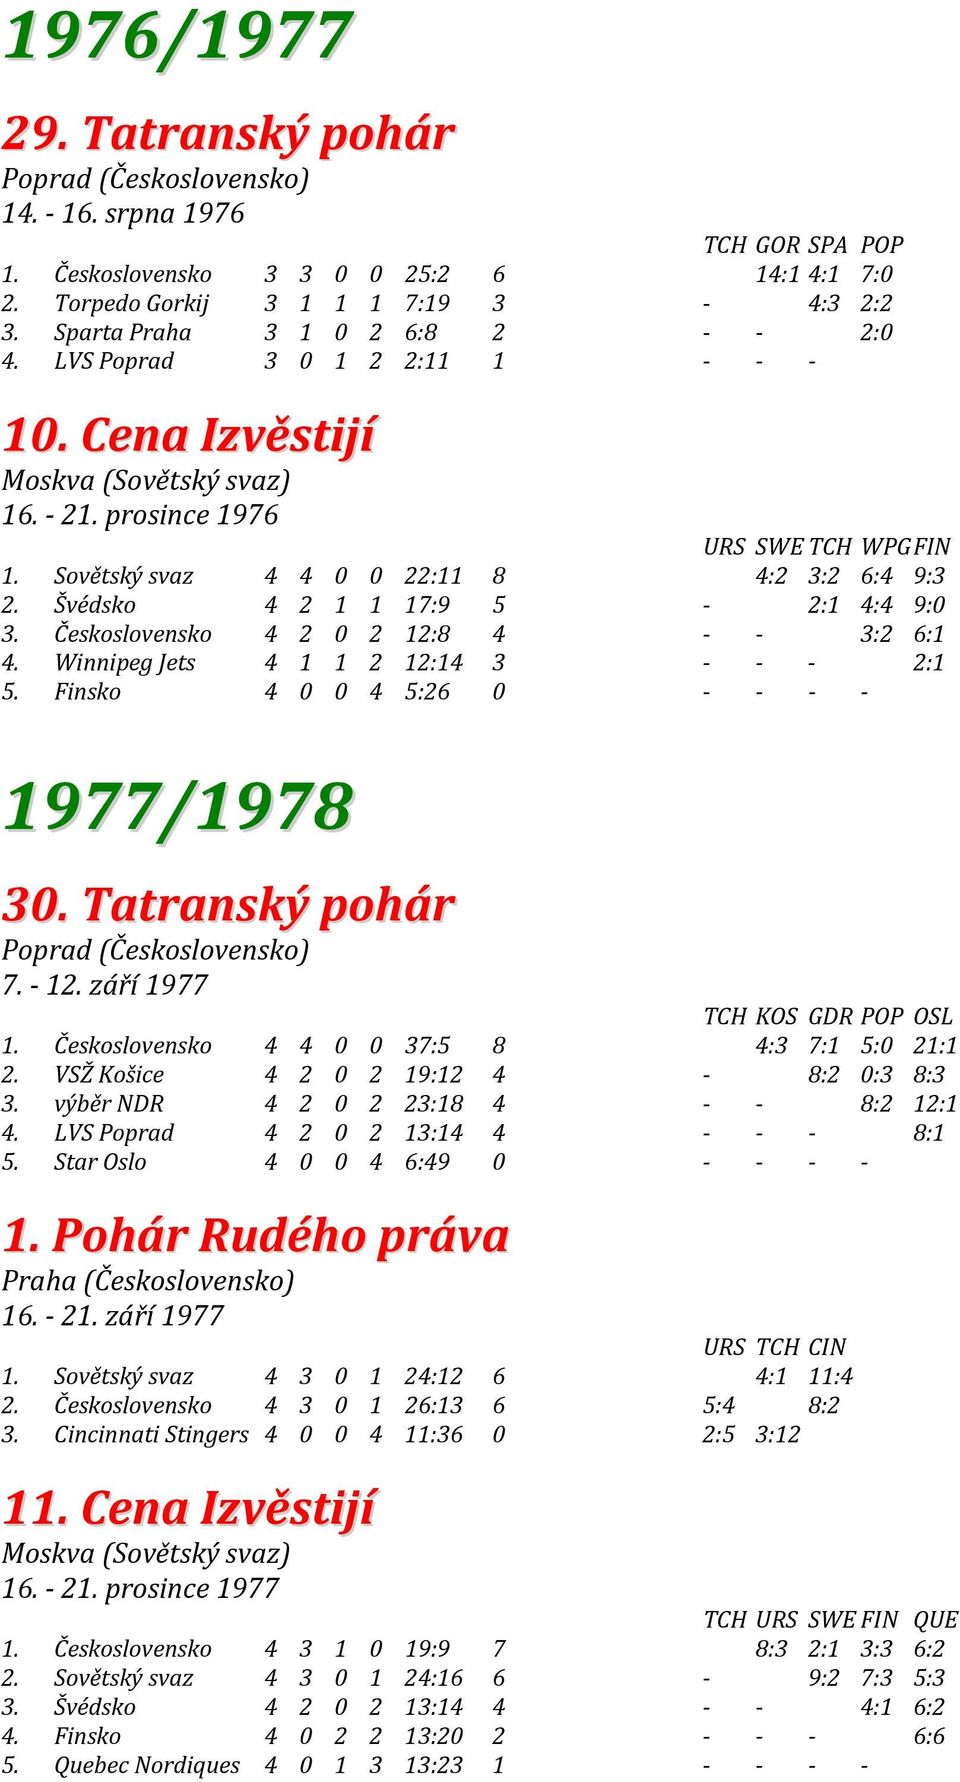 Švédsko 4 2 1 1 17:9 5-2:1 4:4 9:0 3. Československo 4 2 0 2 12:8 4 - - 3:2 6:1 4. Winnipeg Jets 4 1 1 2 12:14 3 - - - 2:1 5. Finsko 4 0 0 4 5:26 0 - - - - 1977/1978 30.